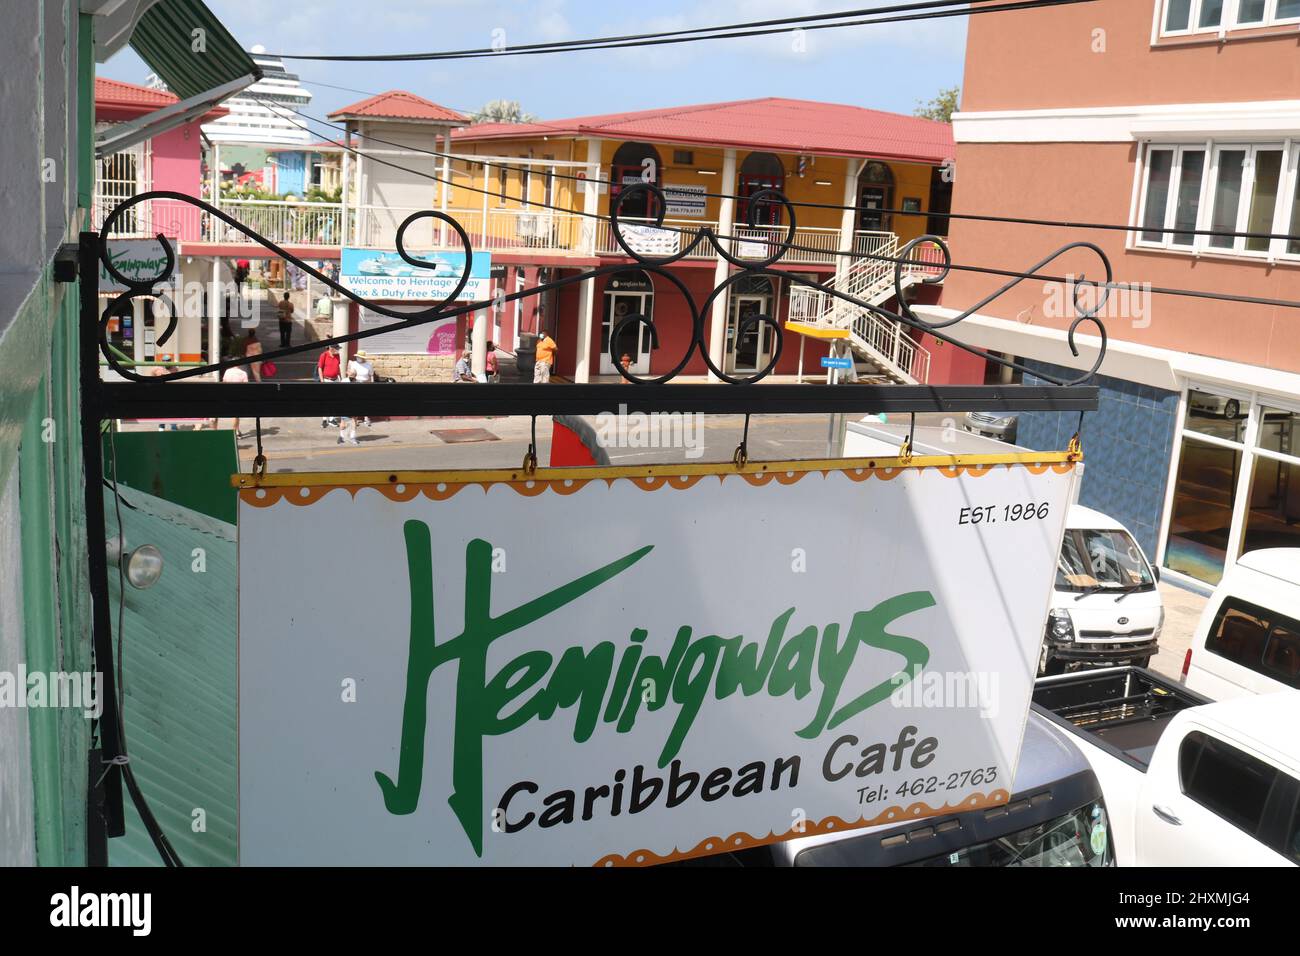 Sign for Hemingways Caribbean cafe in St John's Antigua and Barbuda Stock Photo